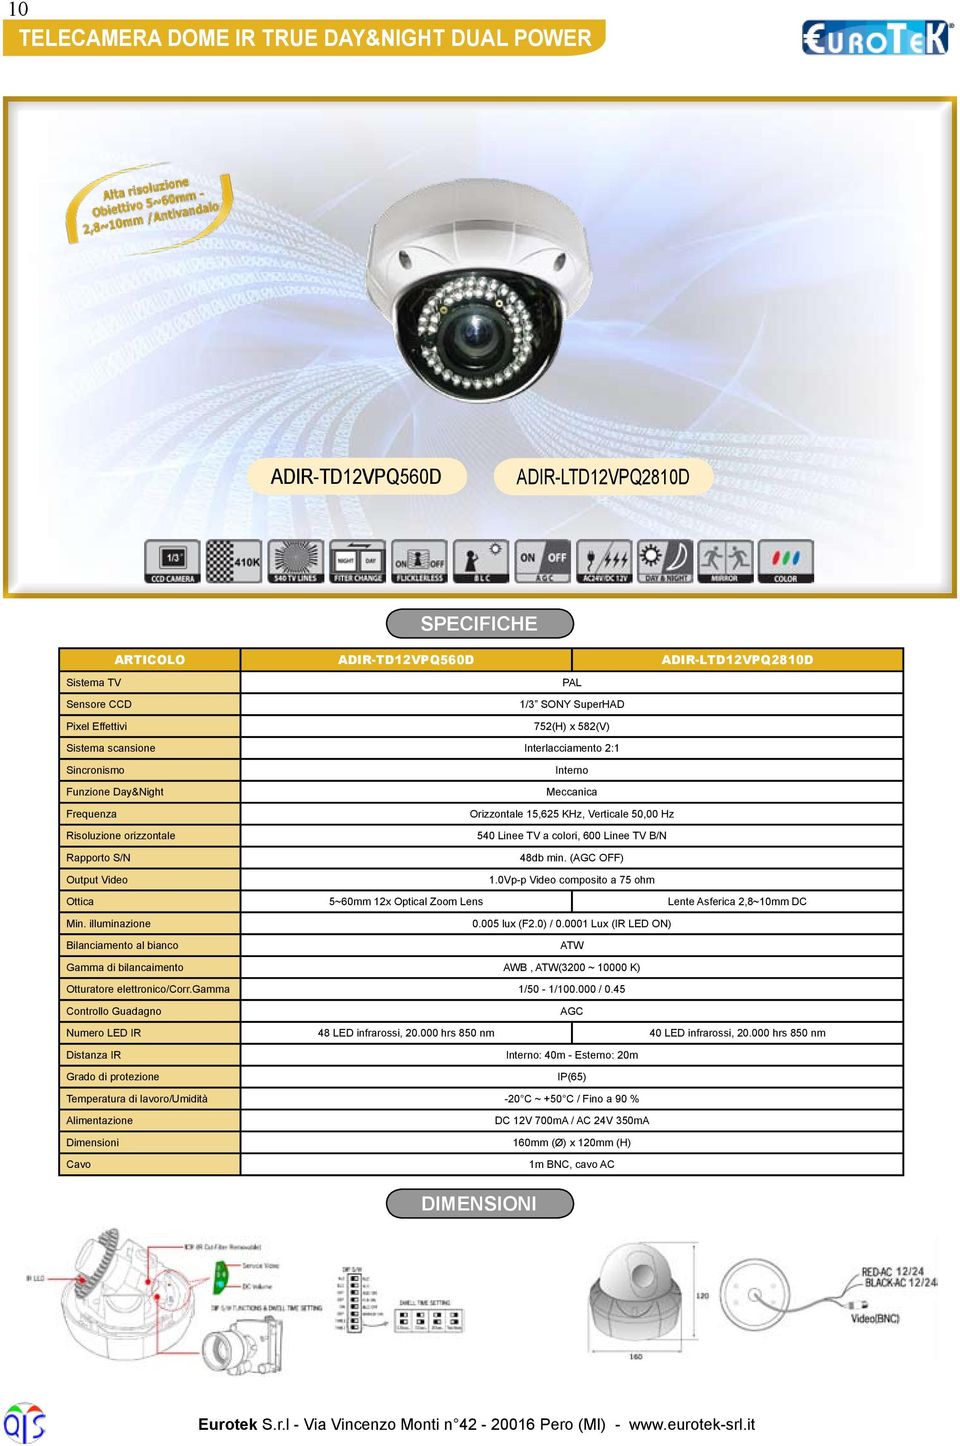 Linee TV B/N Rapporto S/N 48db min. (AGC OFF) Output Video 1.0Vp-p Video composito a 75 ohm Ottica 5~60mm 12x Optical Zoom Lens Lente Asferica 2,8~10mm DC Min. illuminazione 0.005 lux (F2.0) / 0.